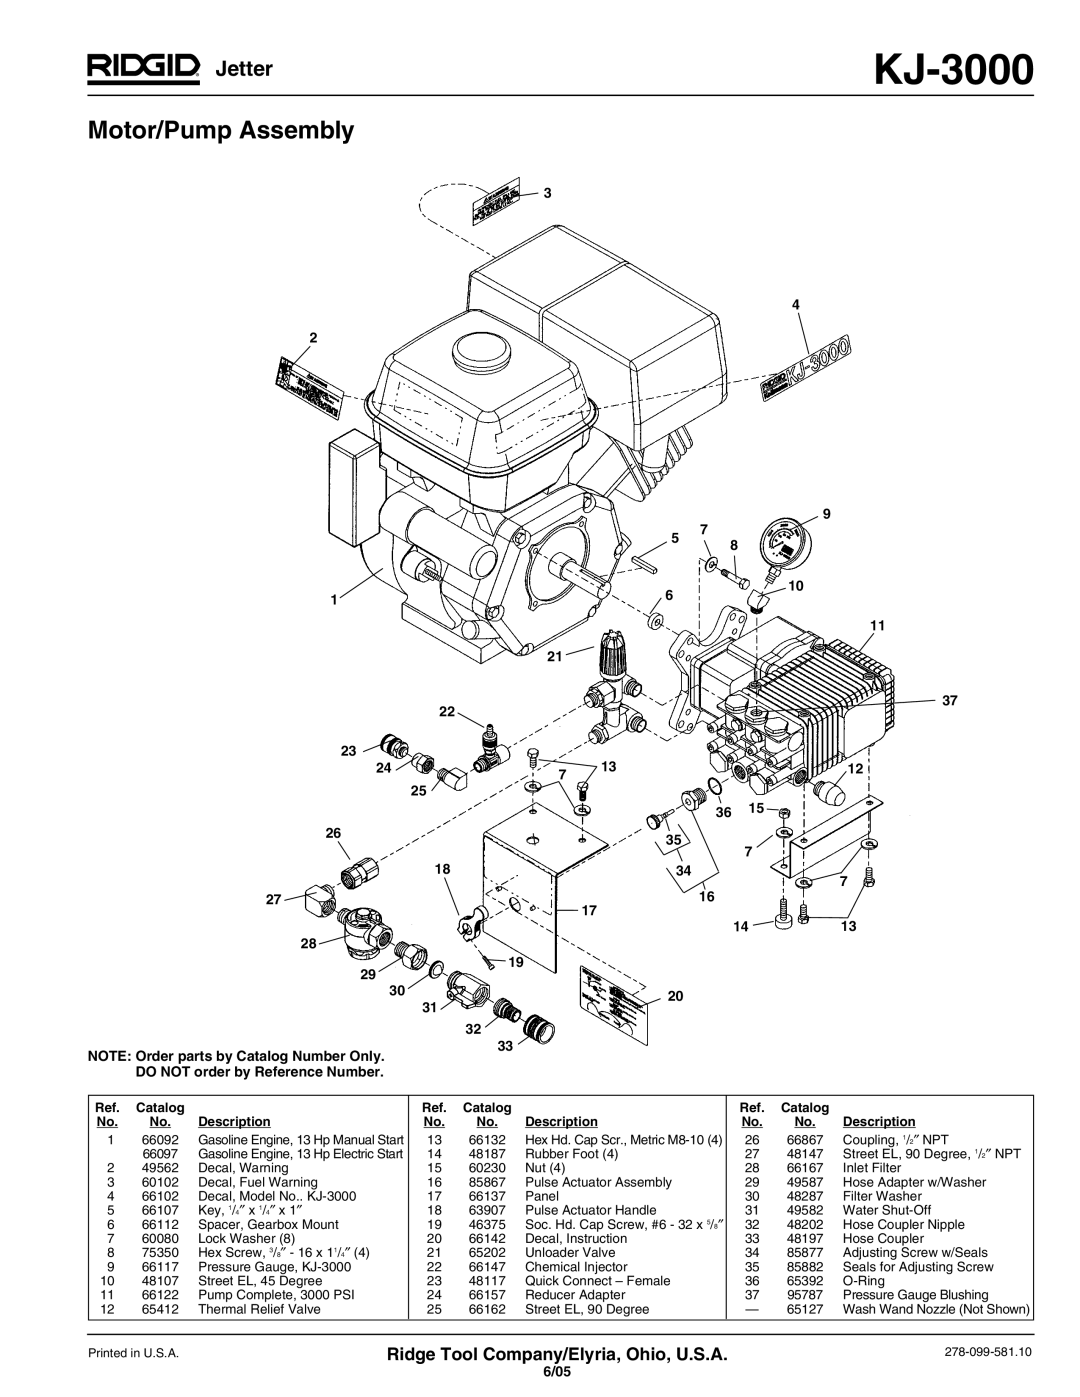 RIDGID KJ-3000 manual Motor/Pump Assembly, Jetter, Ridge Tool Company/Elyria, Ohio, U.S.A 